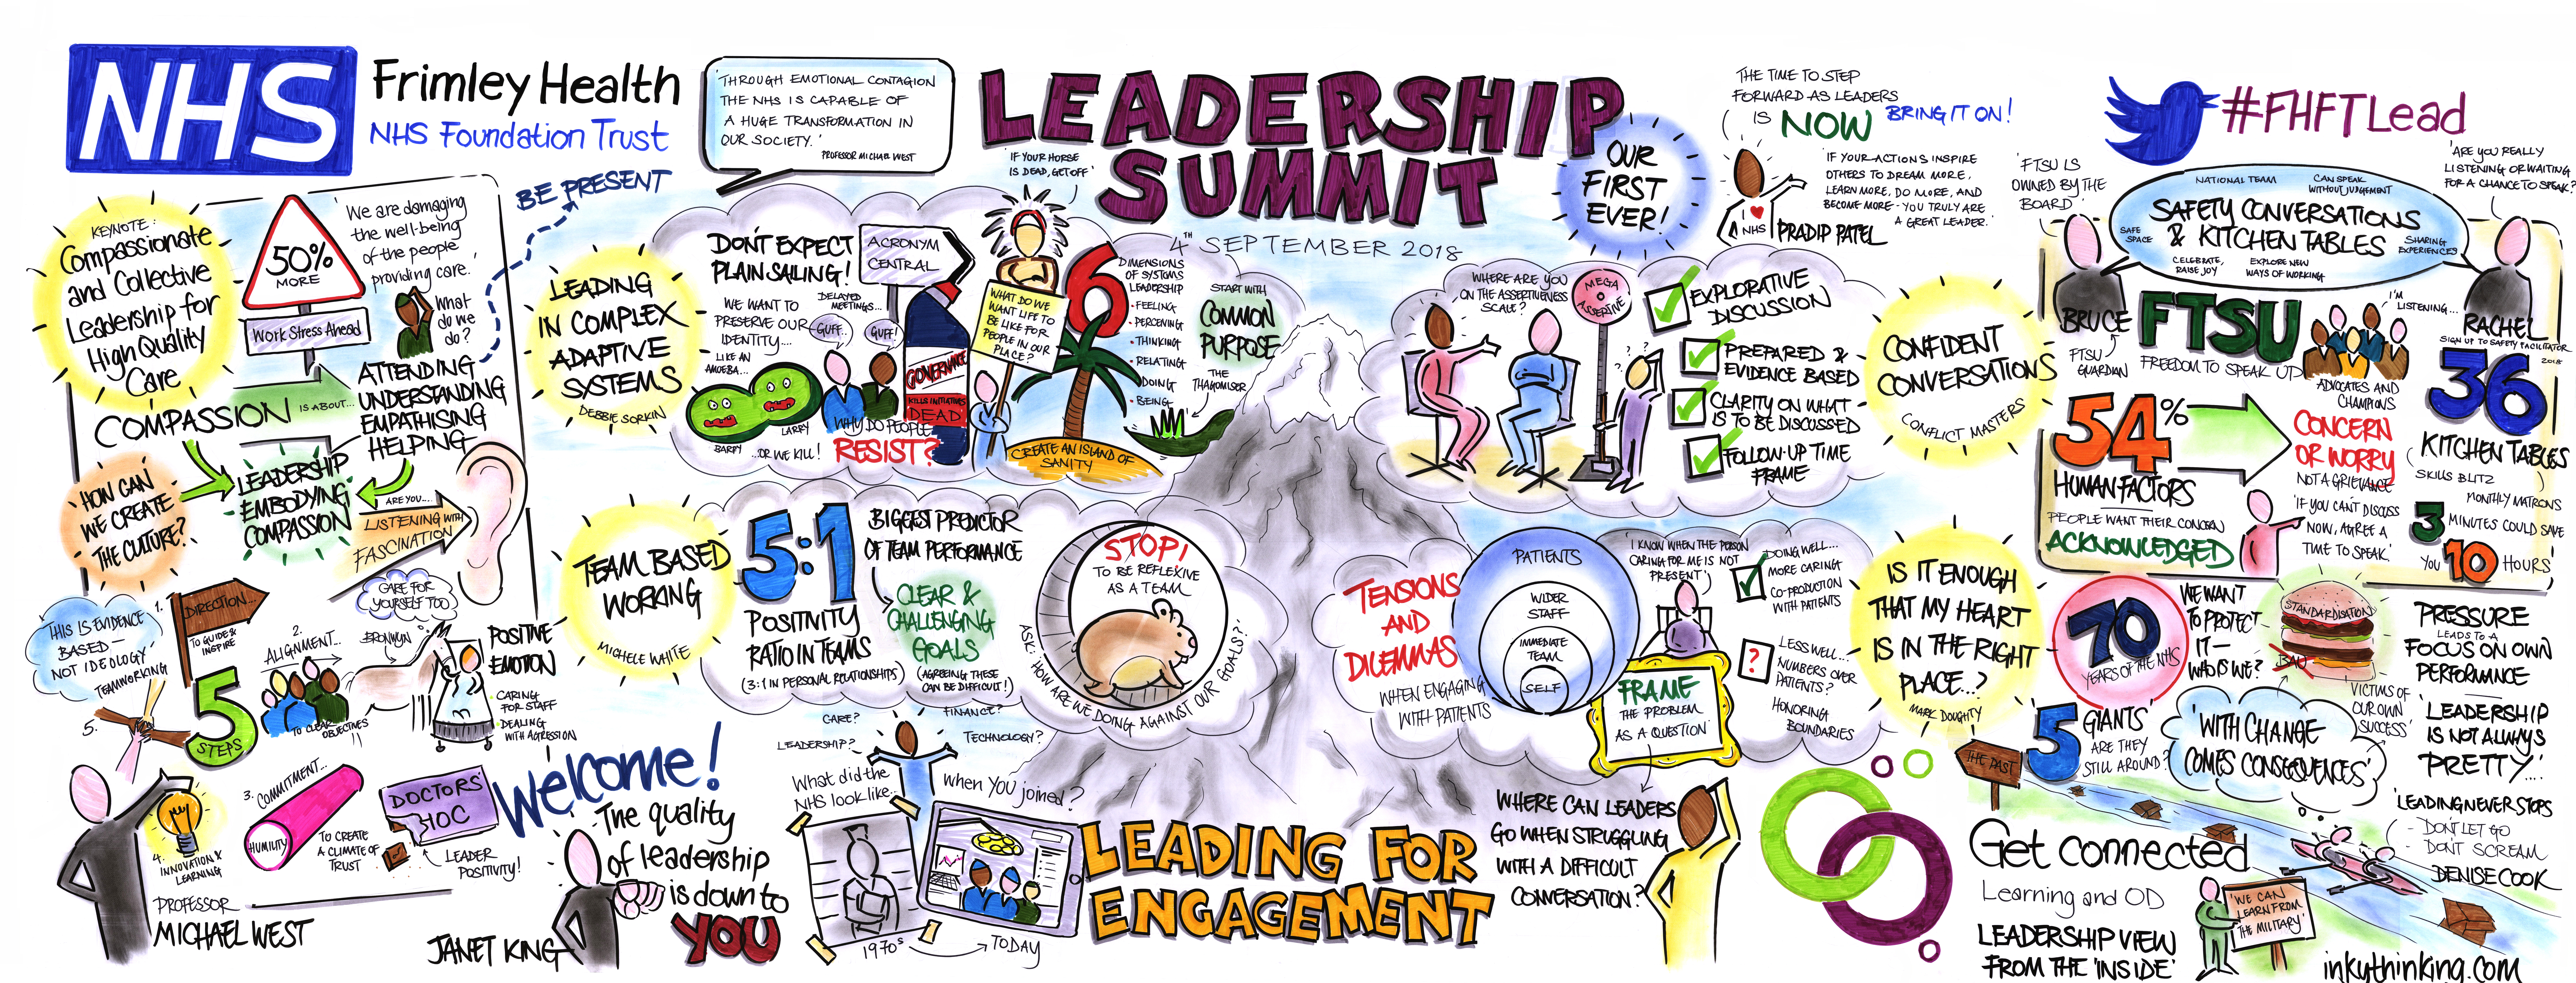 NHS Frimley Leadership Summit 2018